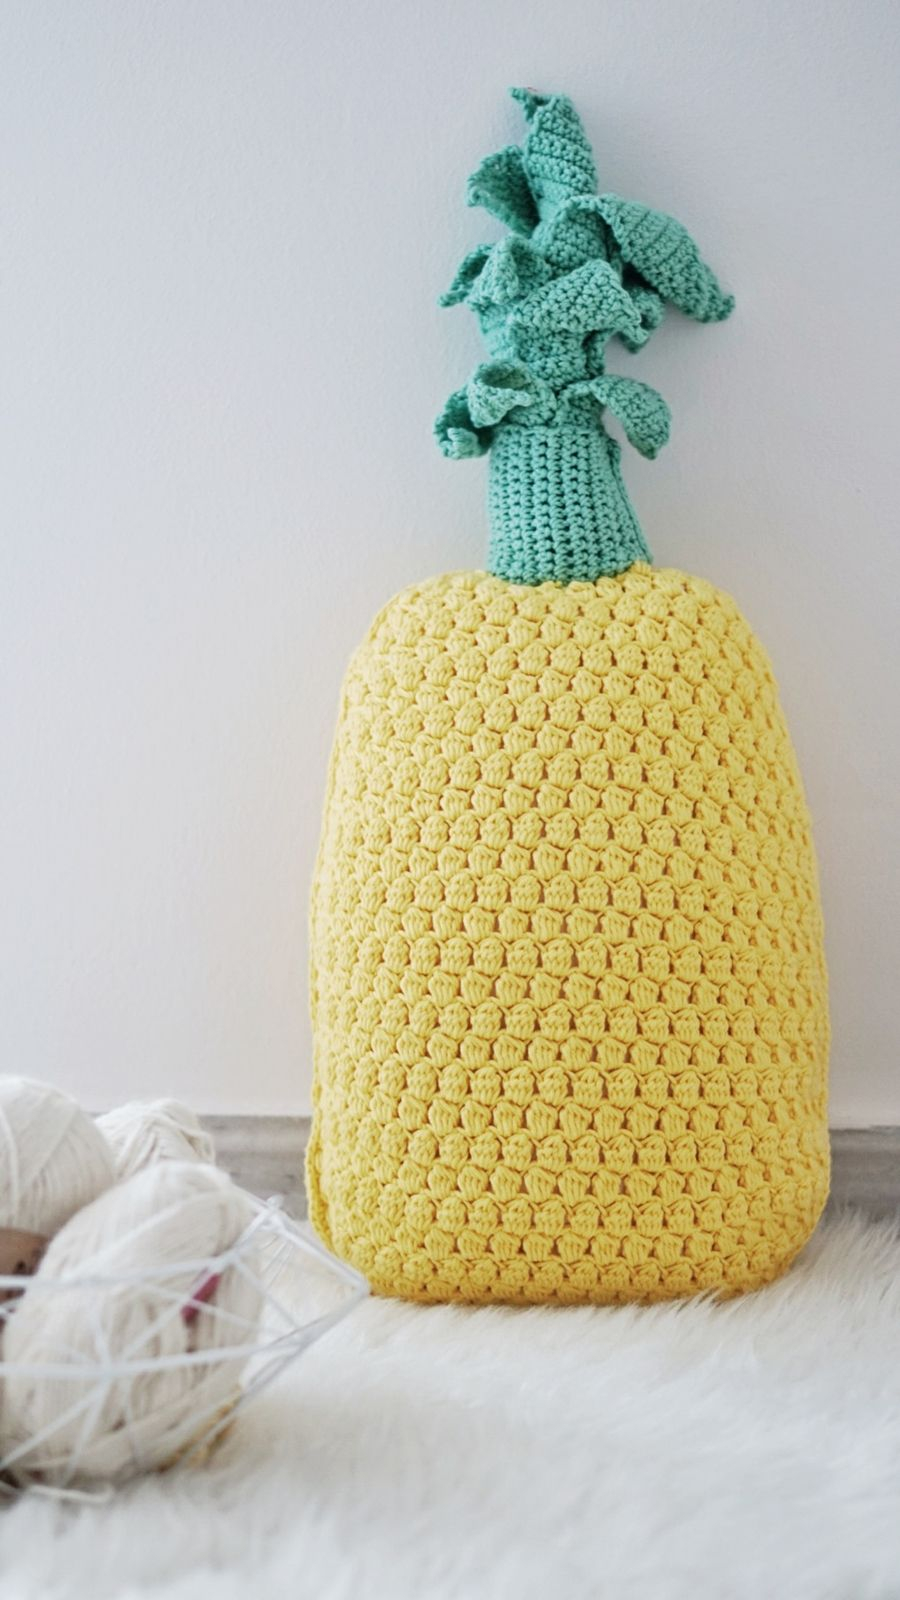 Crochet Pineapple Pattern Crochet Pineapple Pillow With Hobcraft Moore Crochet